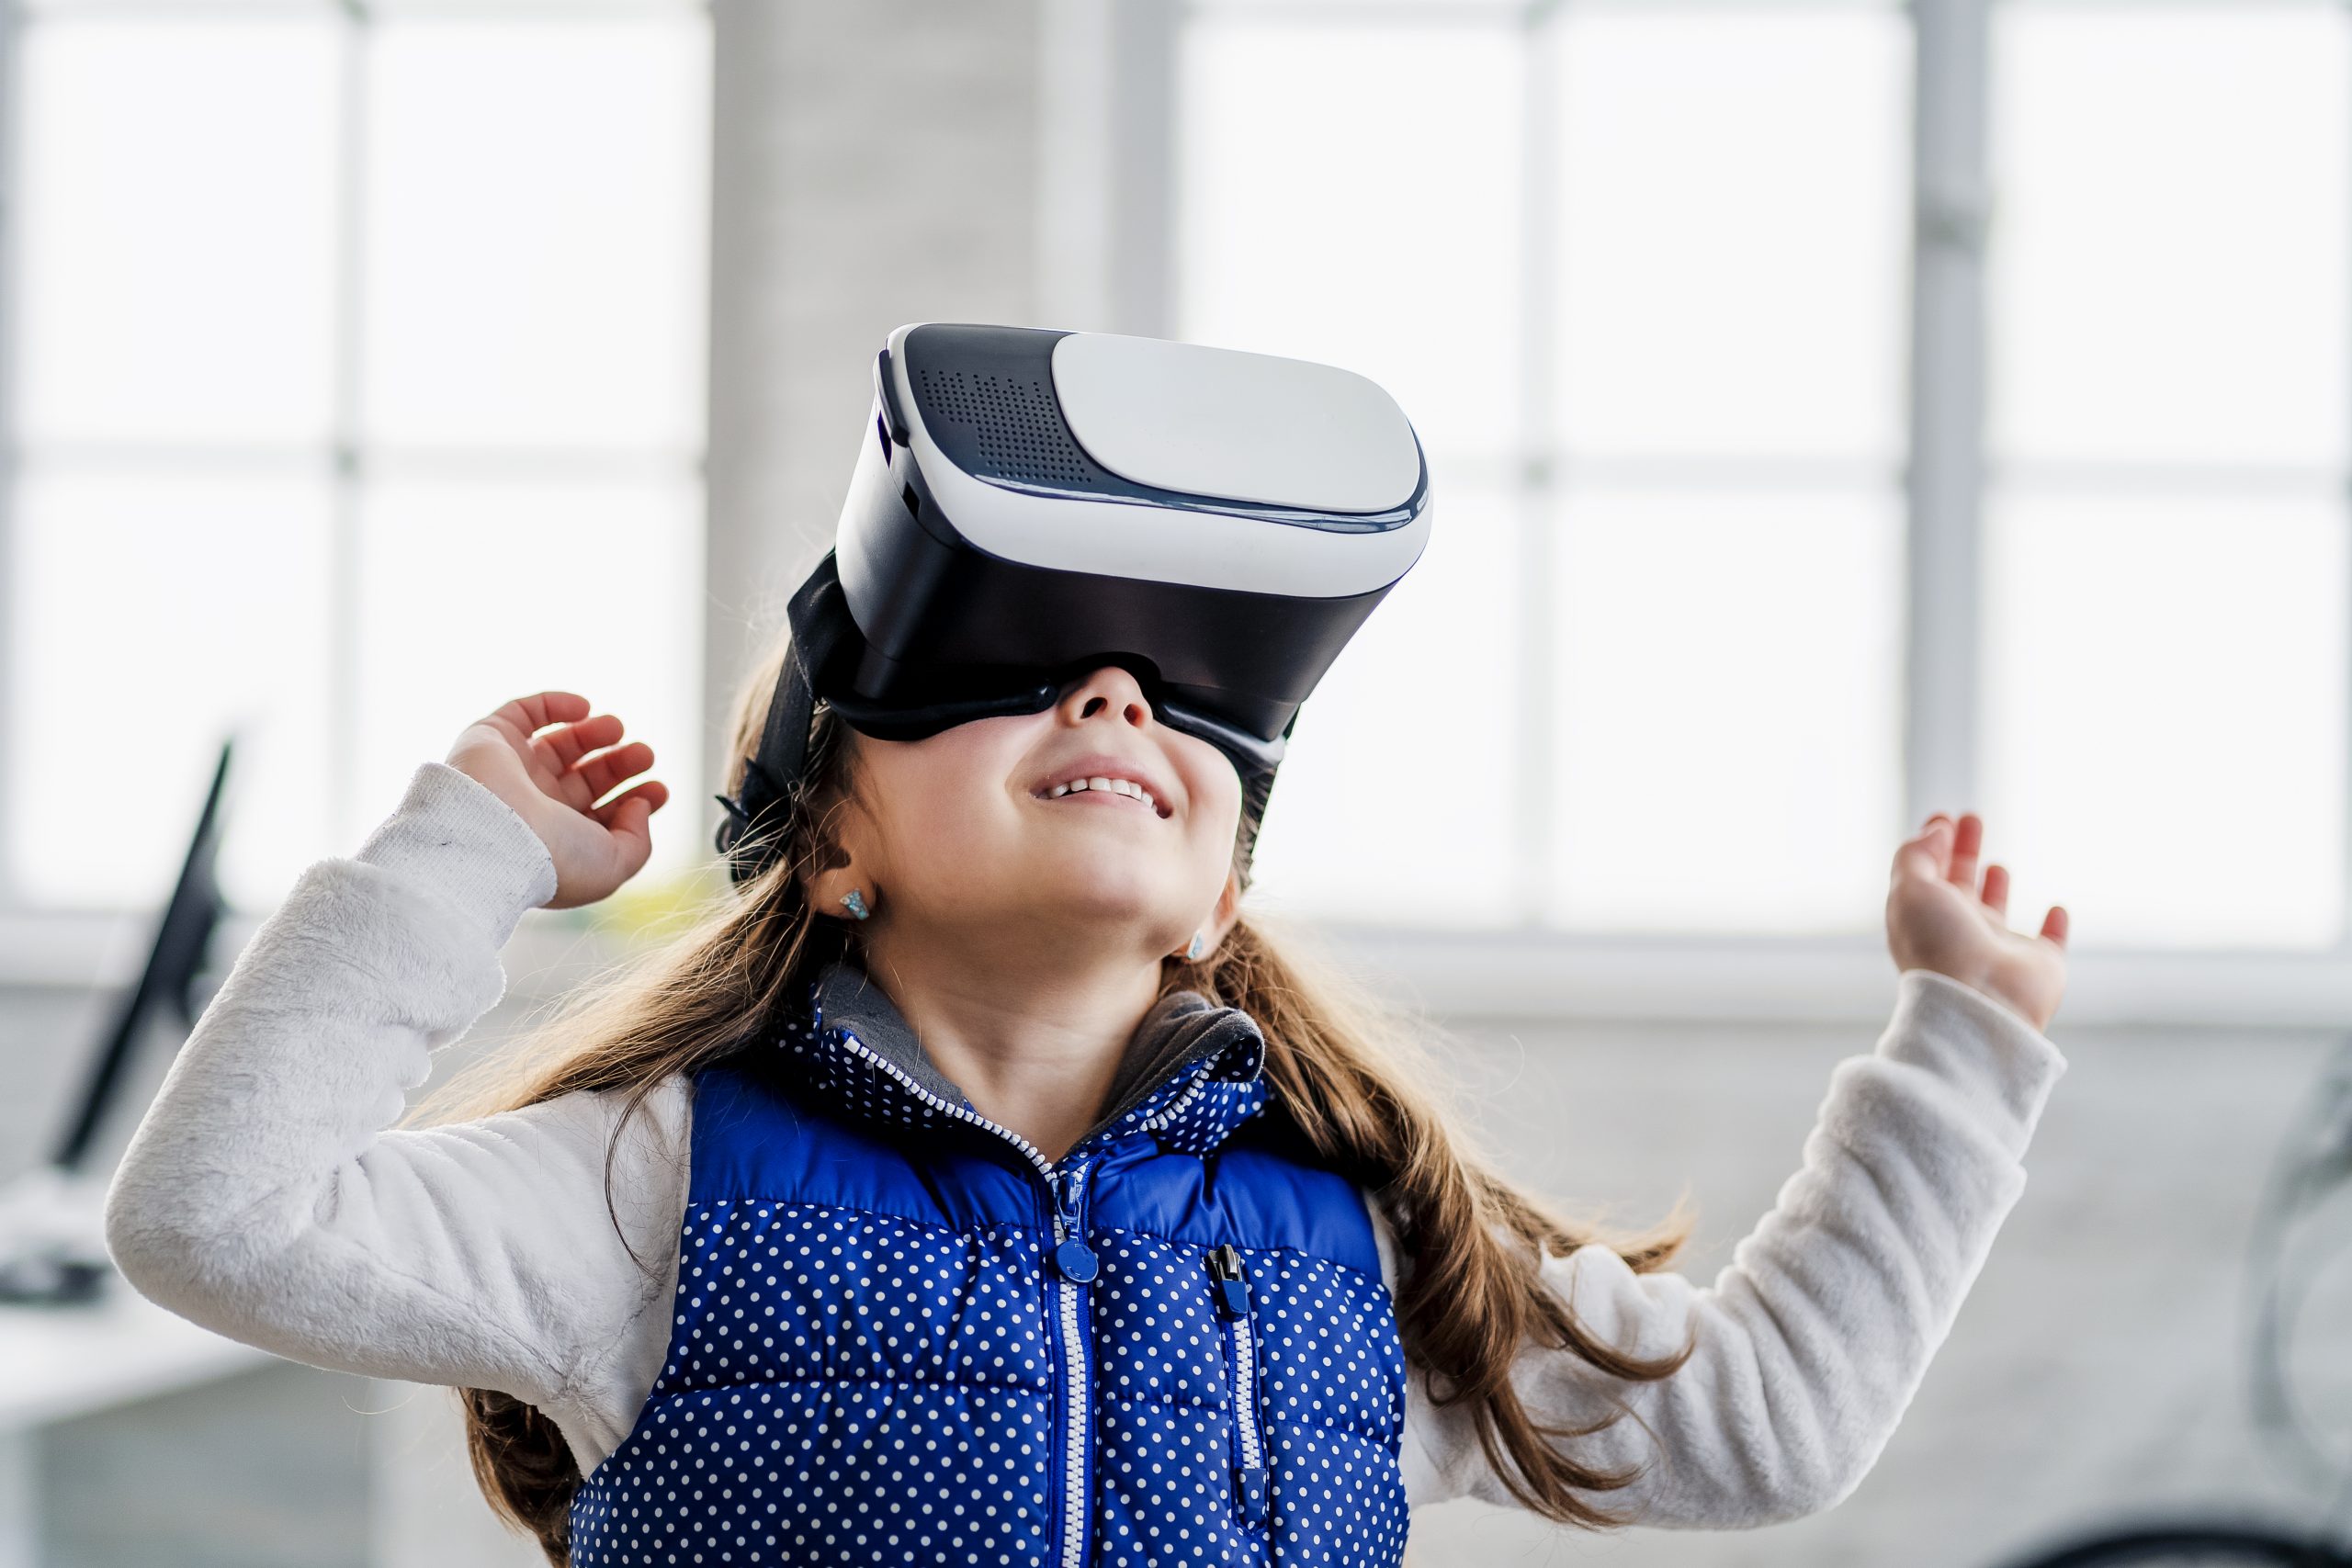 Girl playing with virtual reality headset